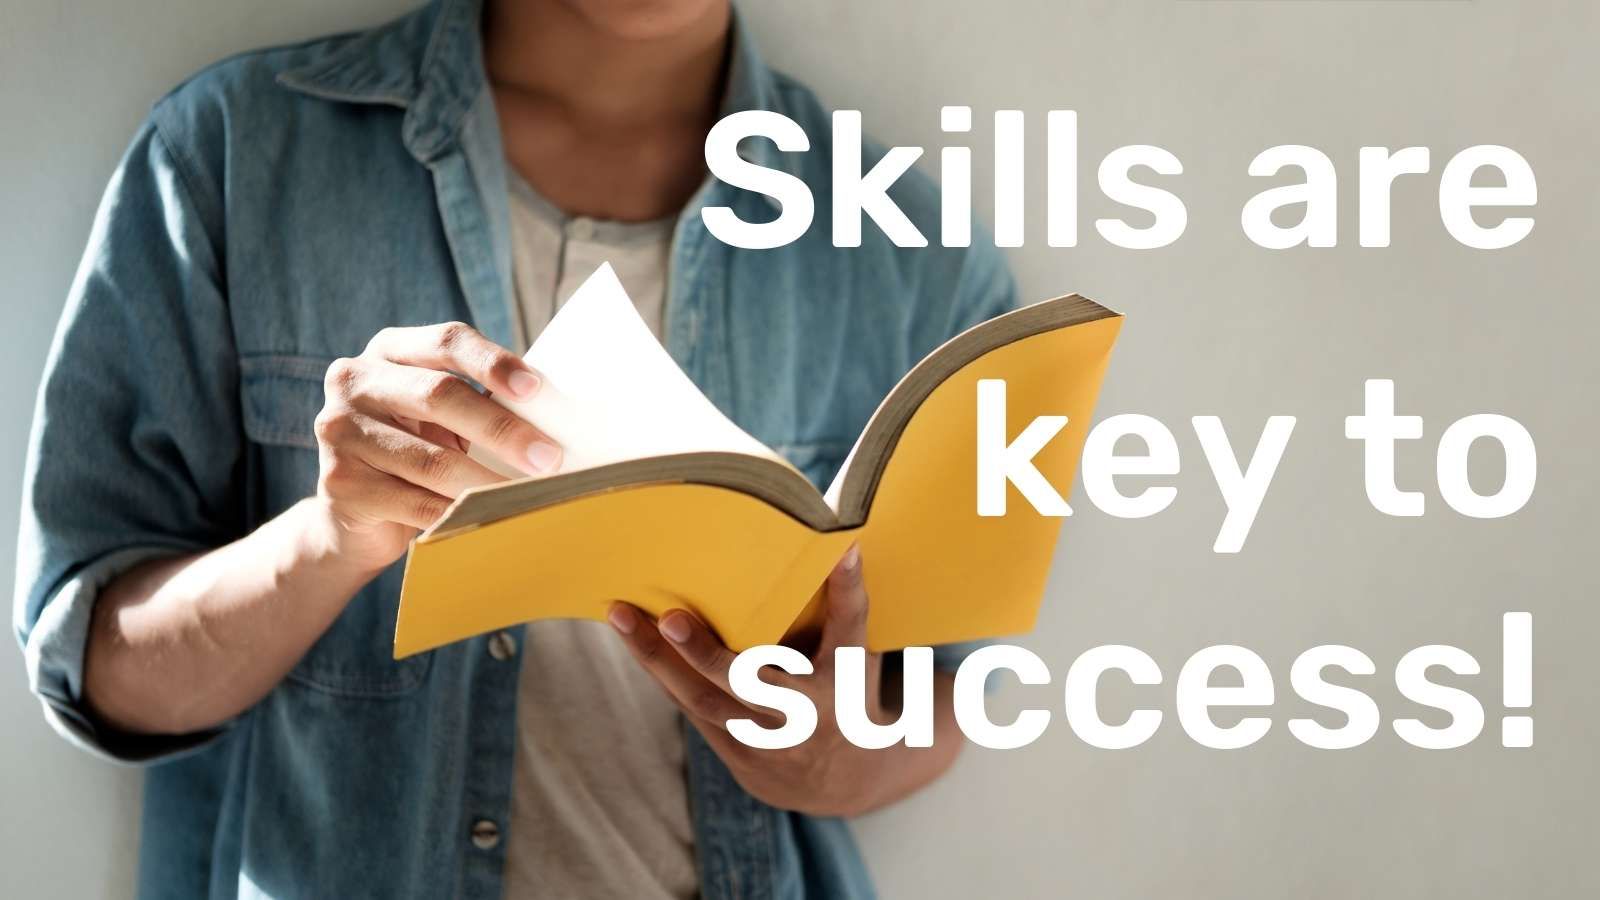 Skills are key to success!